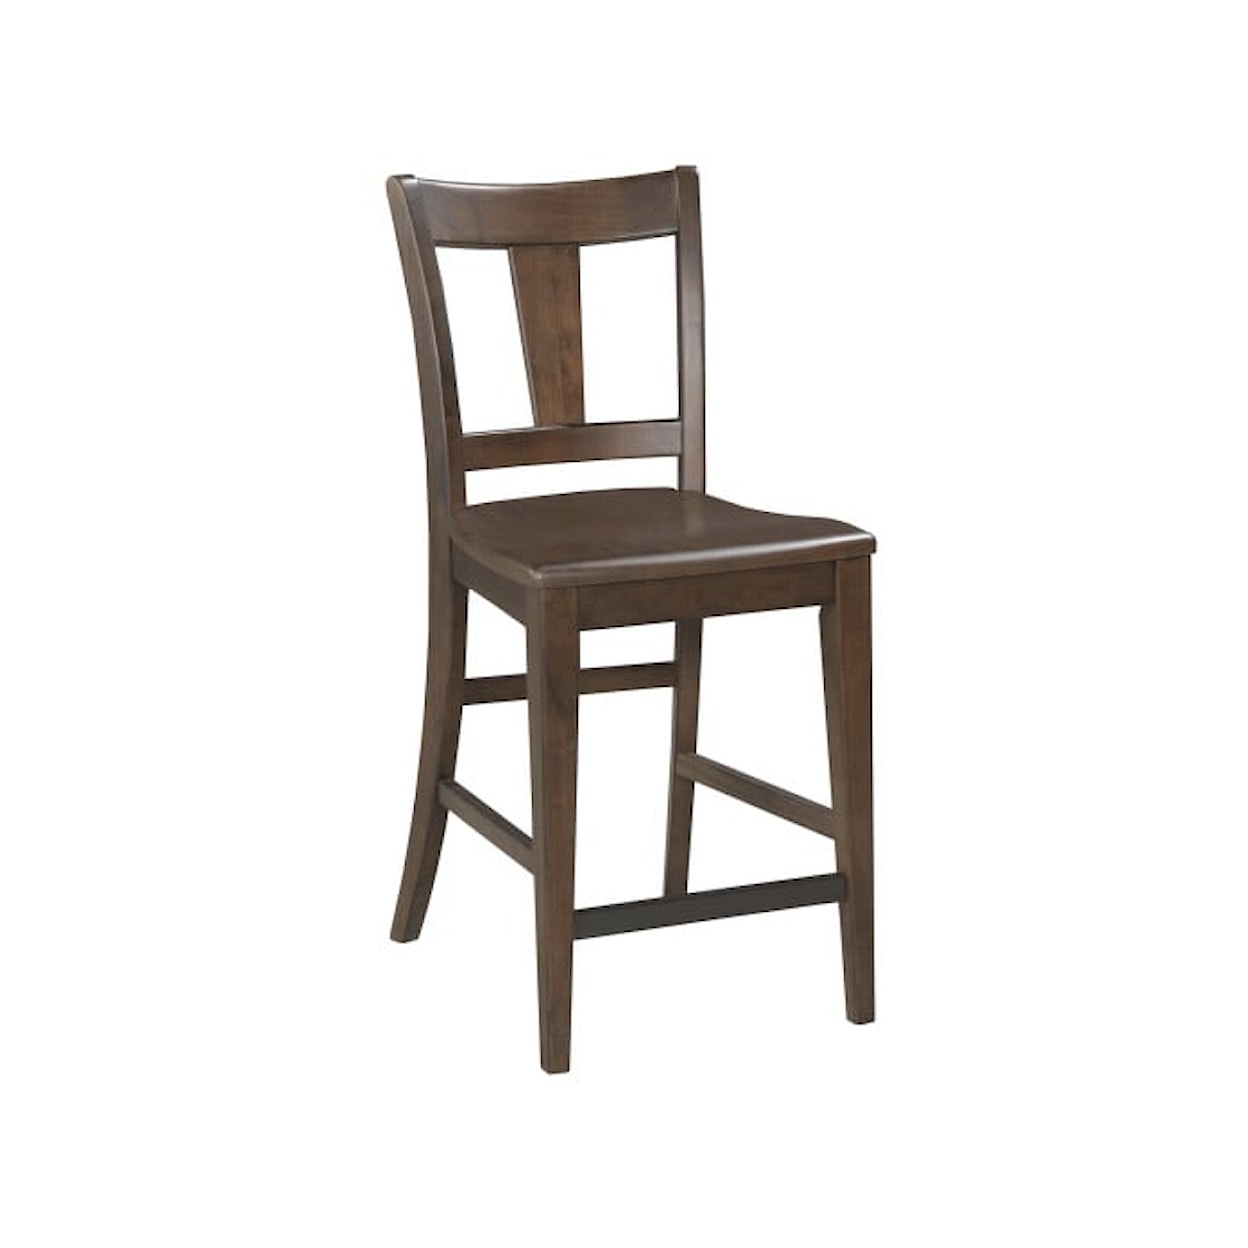 Kincaid Furniture Kafe' Tall Splat Back Chair, Mocha